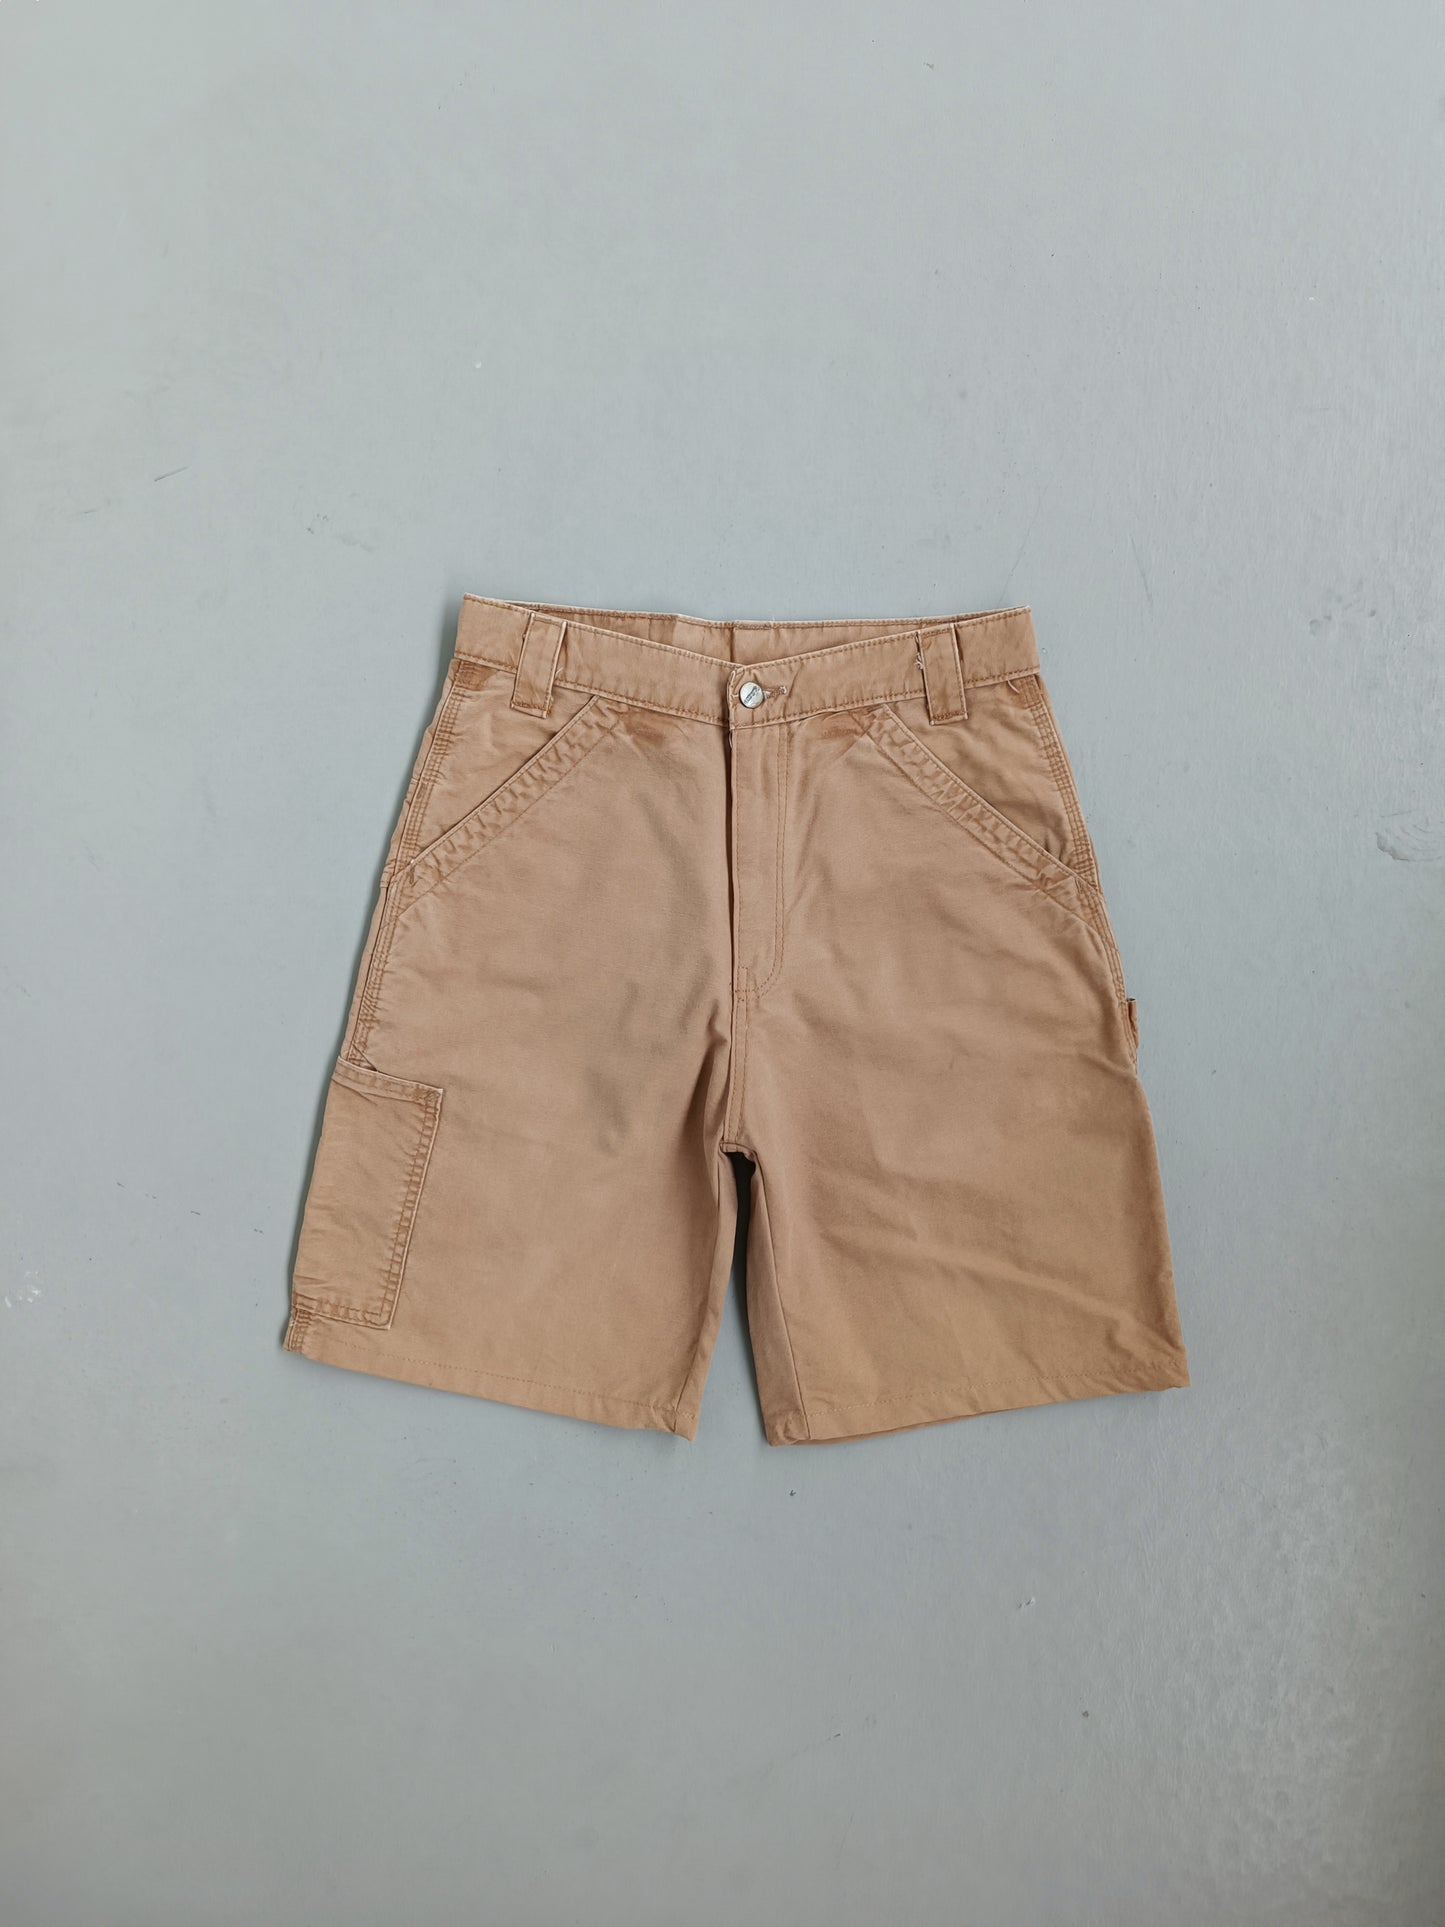 W28 Carhartt carpenter shorts